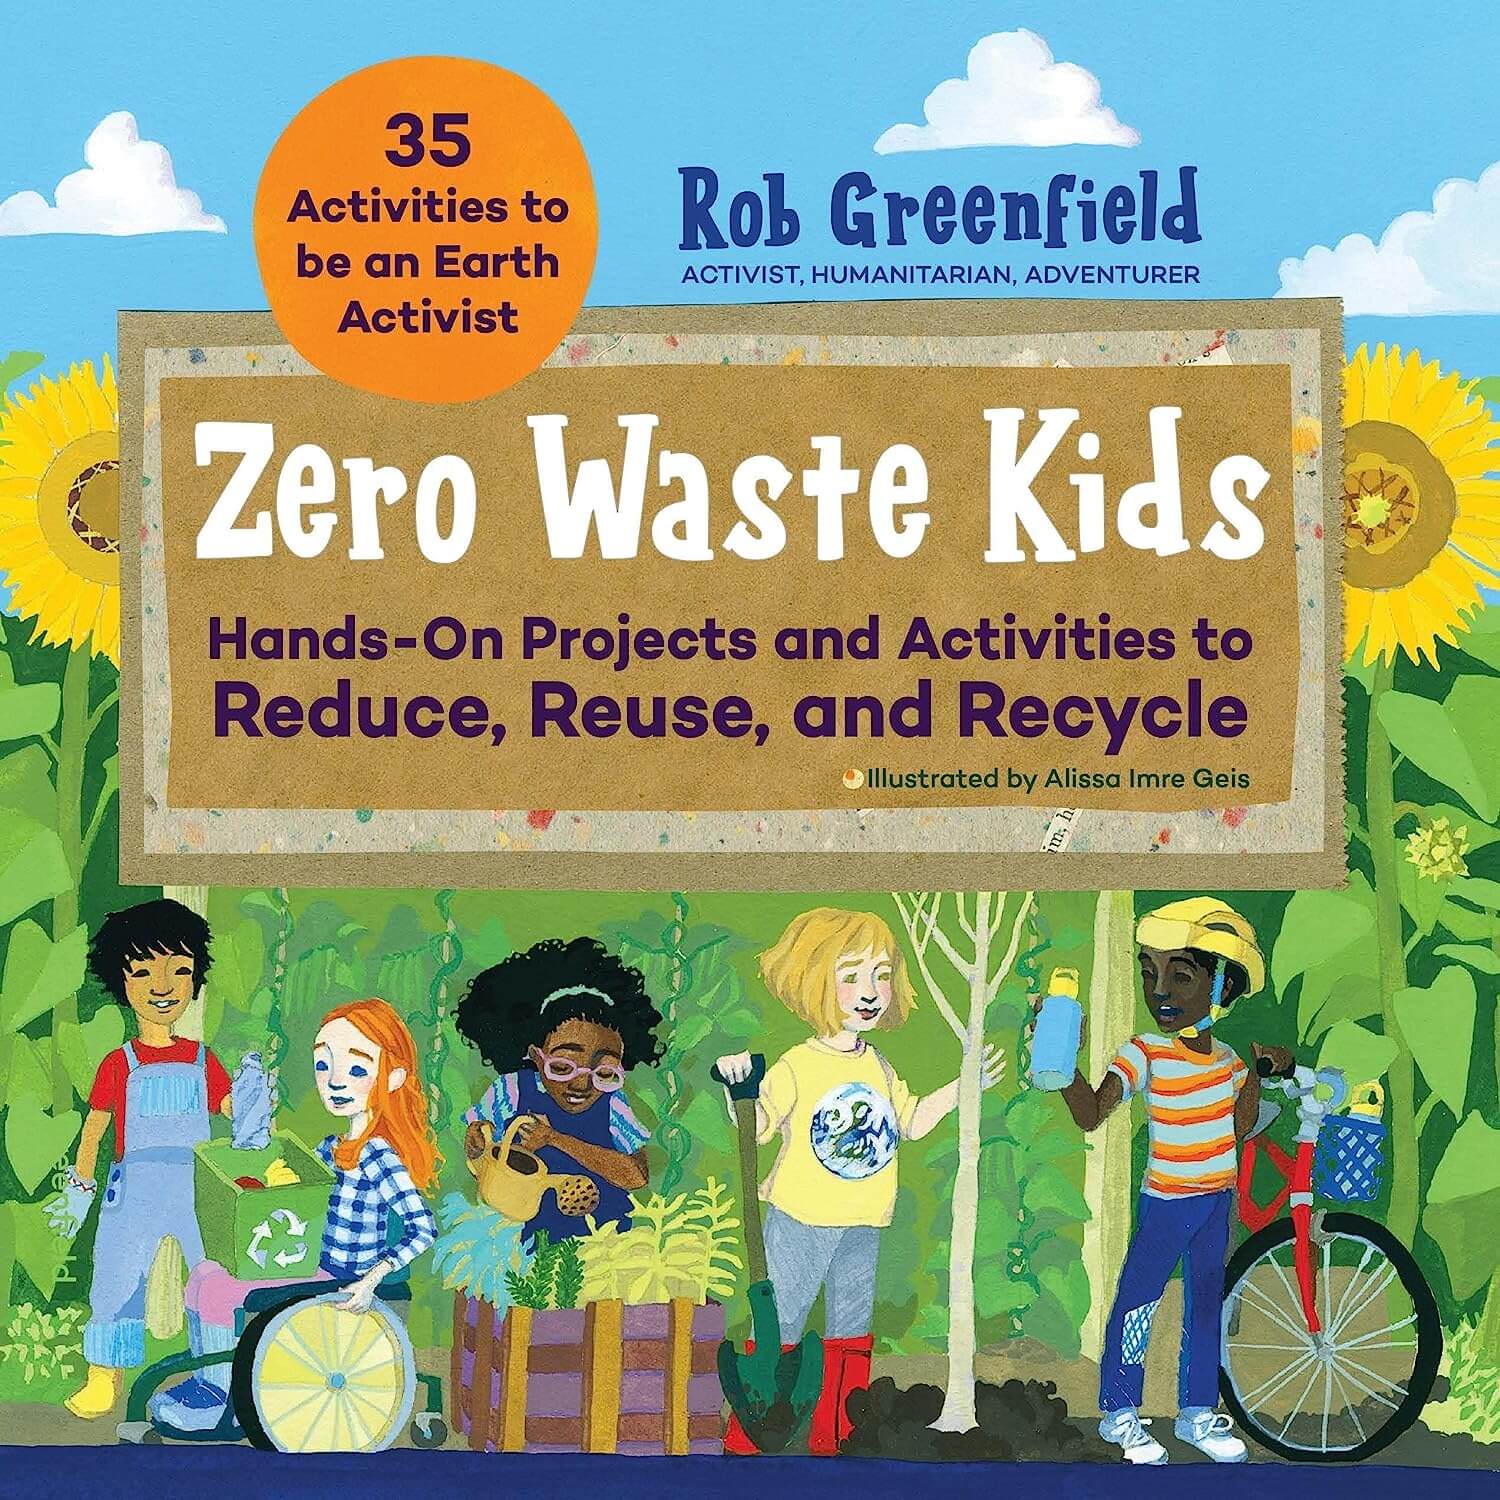 Zero waste kids by Rob Greenfield 